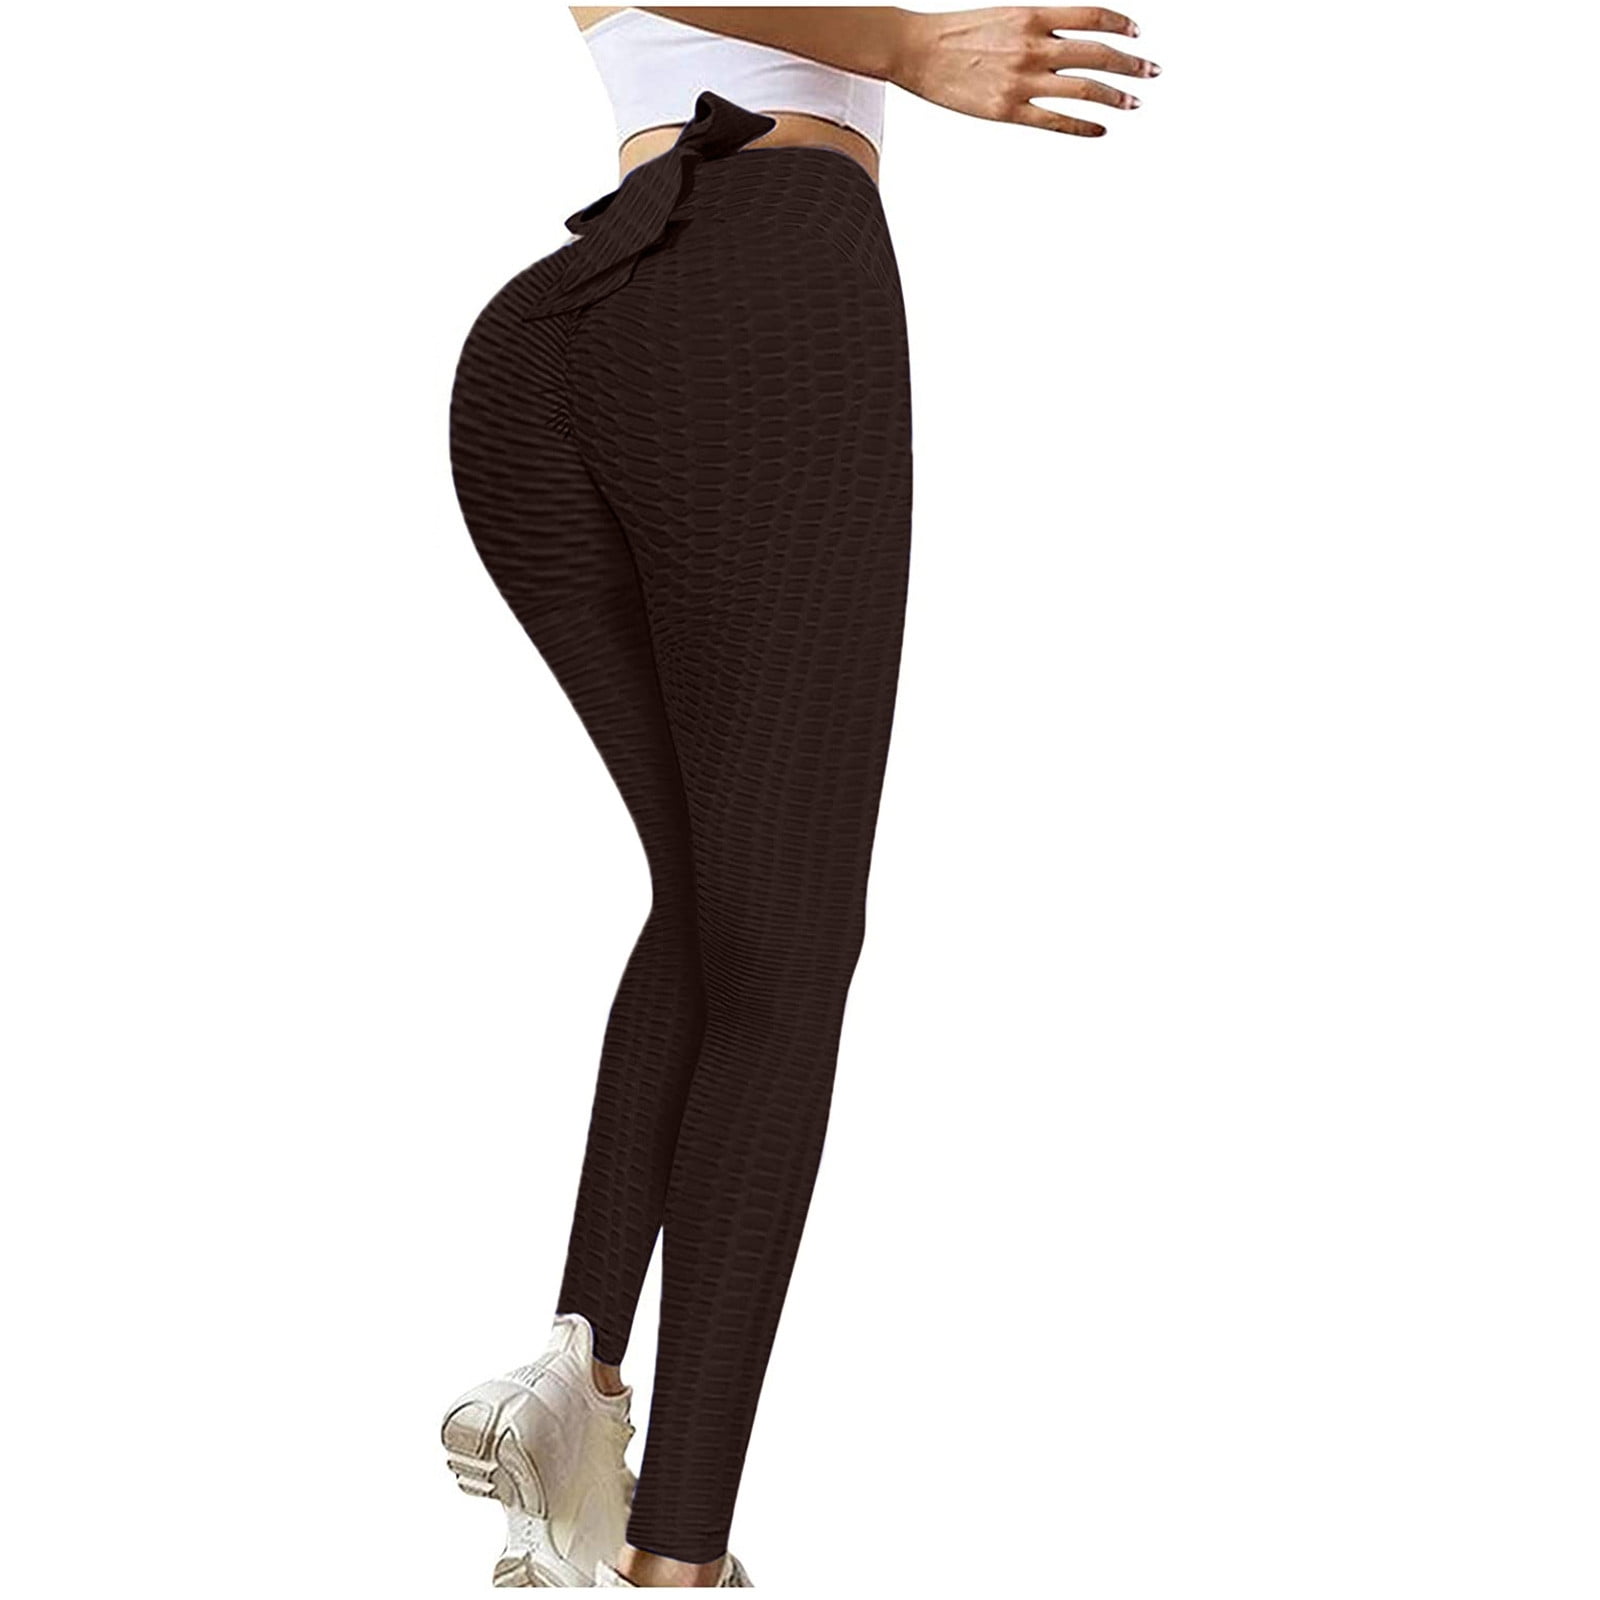 Overalls Invisible Zipper Open Crotch Pants High Waist Yoga Pants